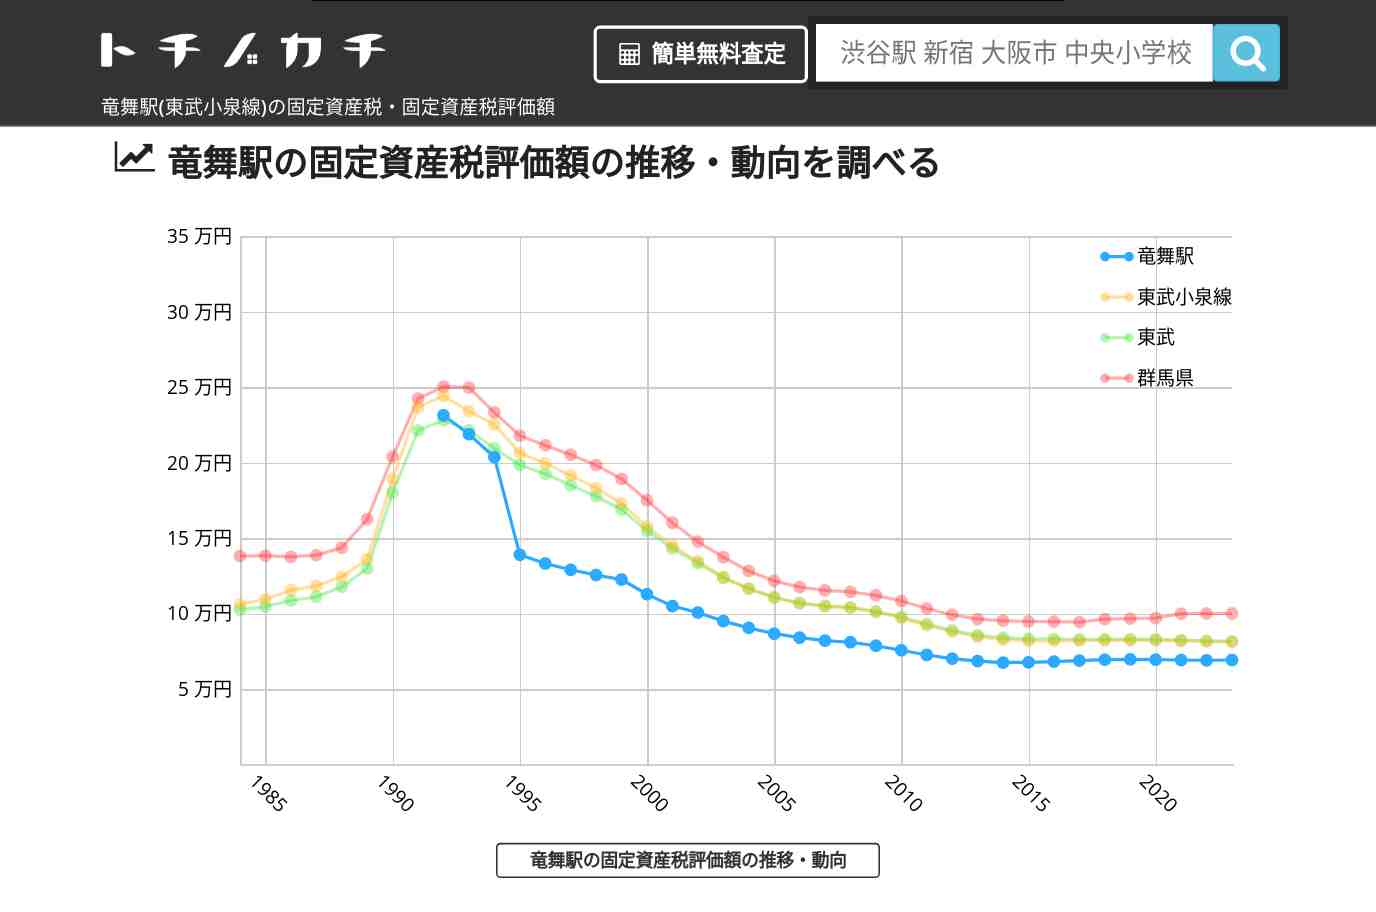 竜舞駅(東武小泉線)の固定資産税・固定資産税評価額 | トチノカチ